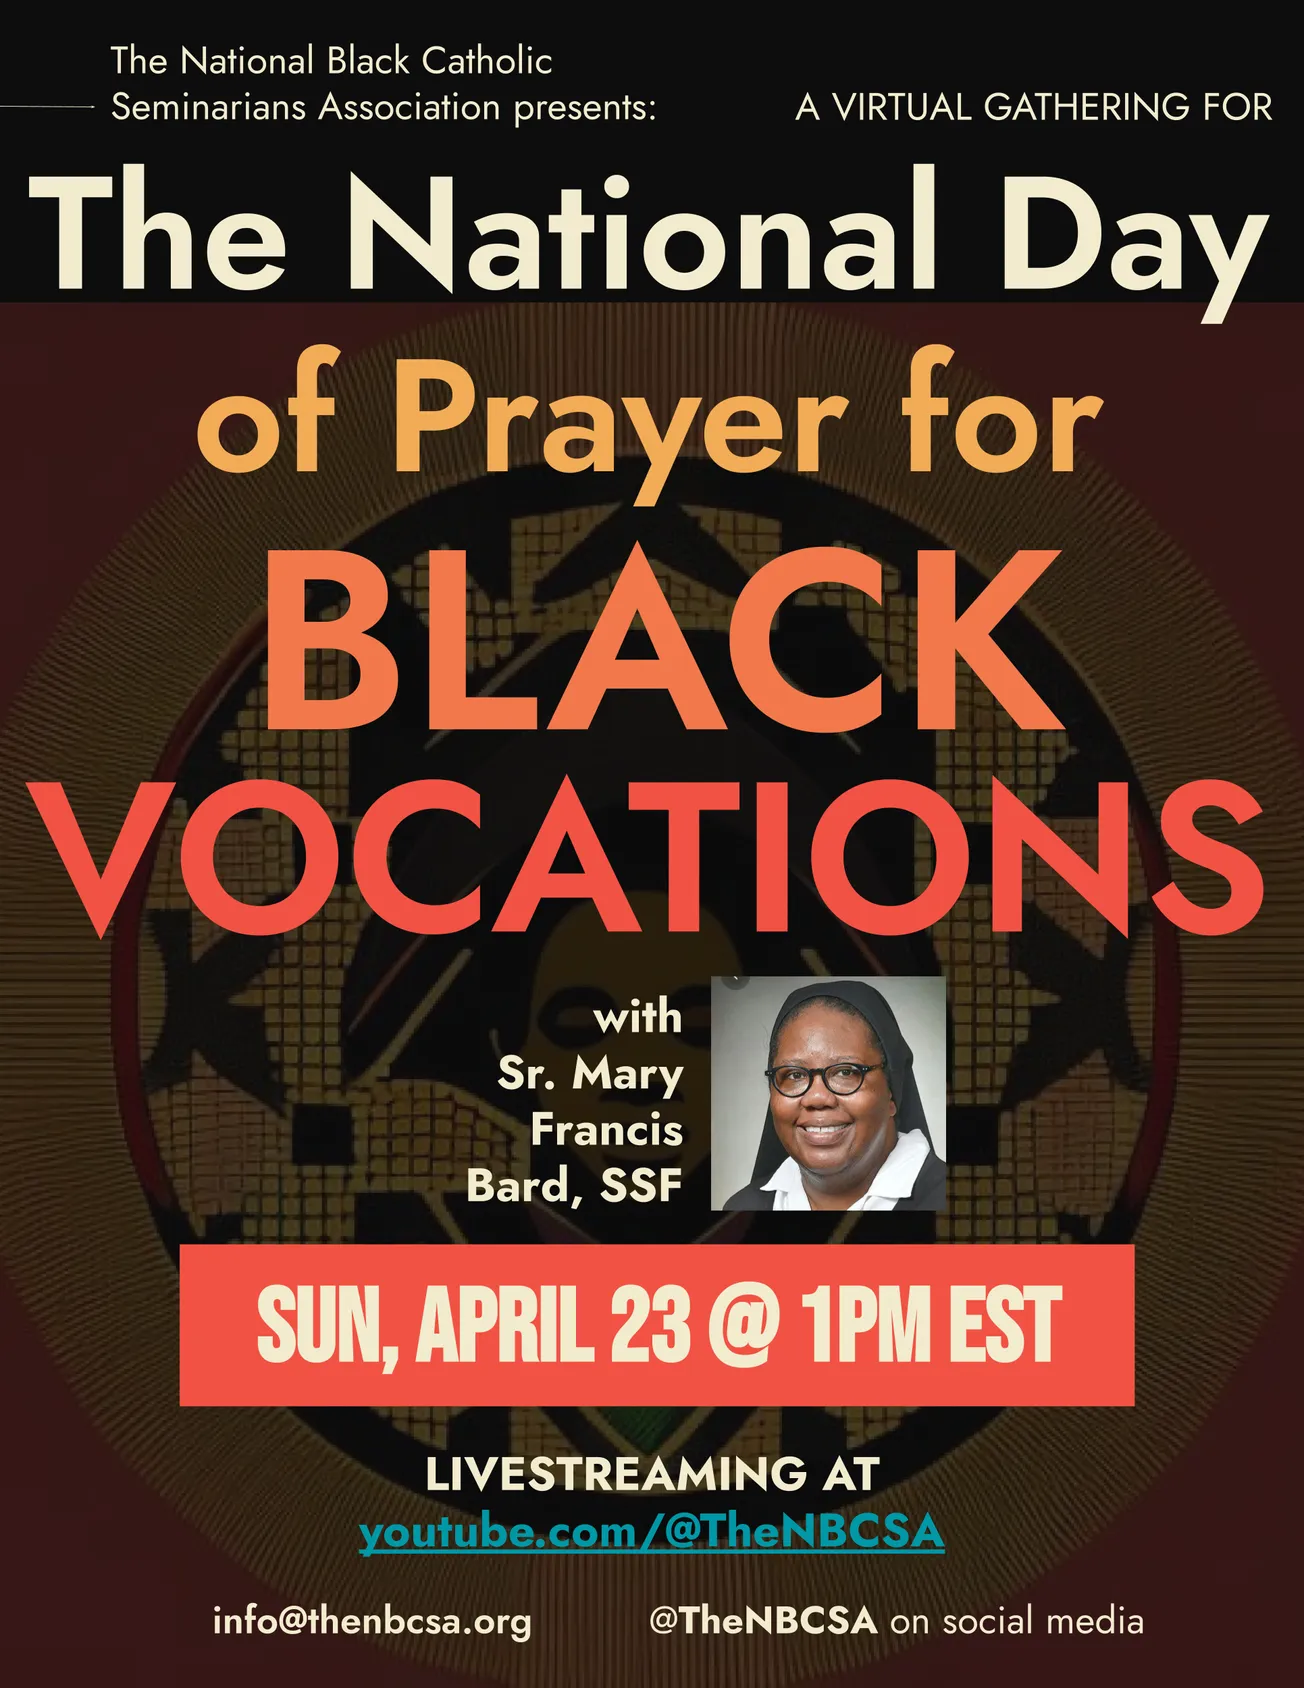 National Day of Prayer for Black Vocations livestream airing on Sunday